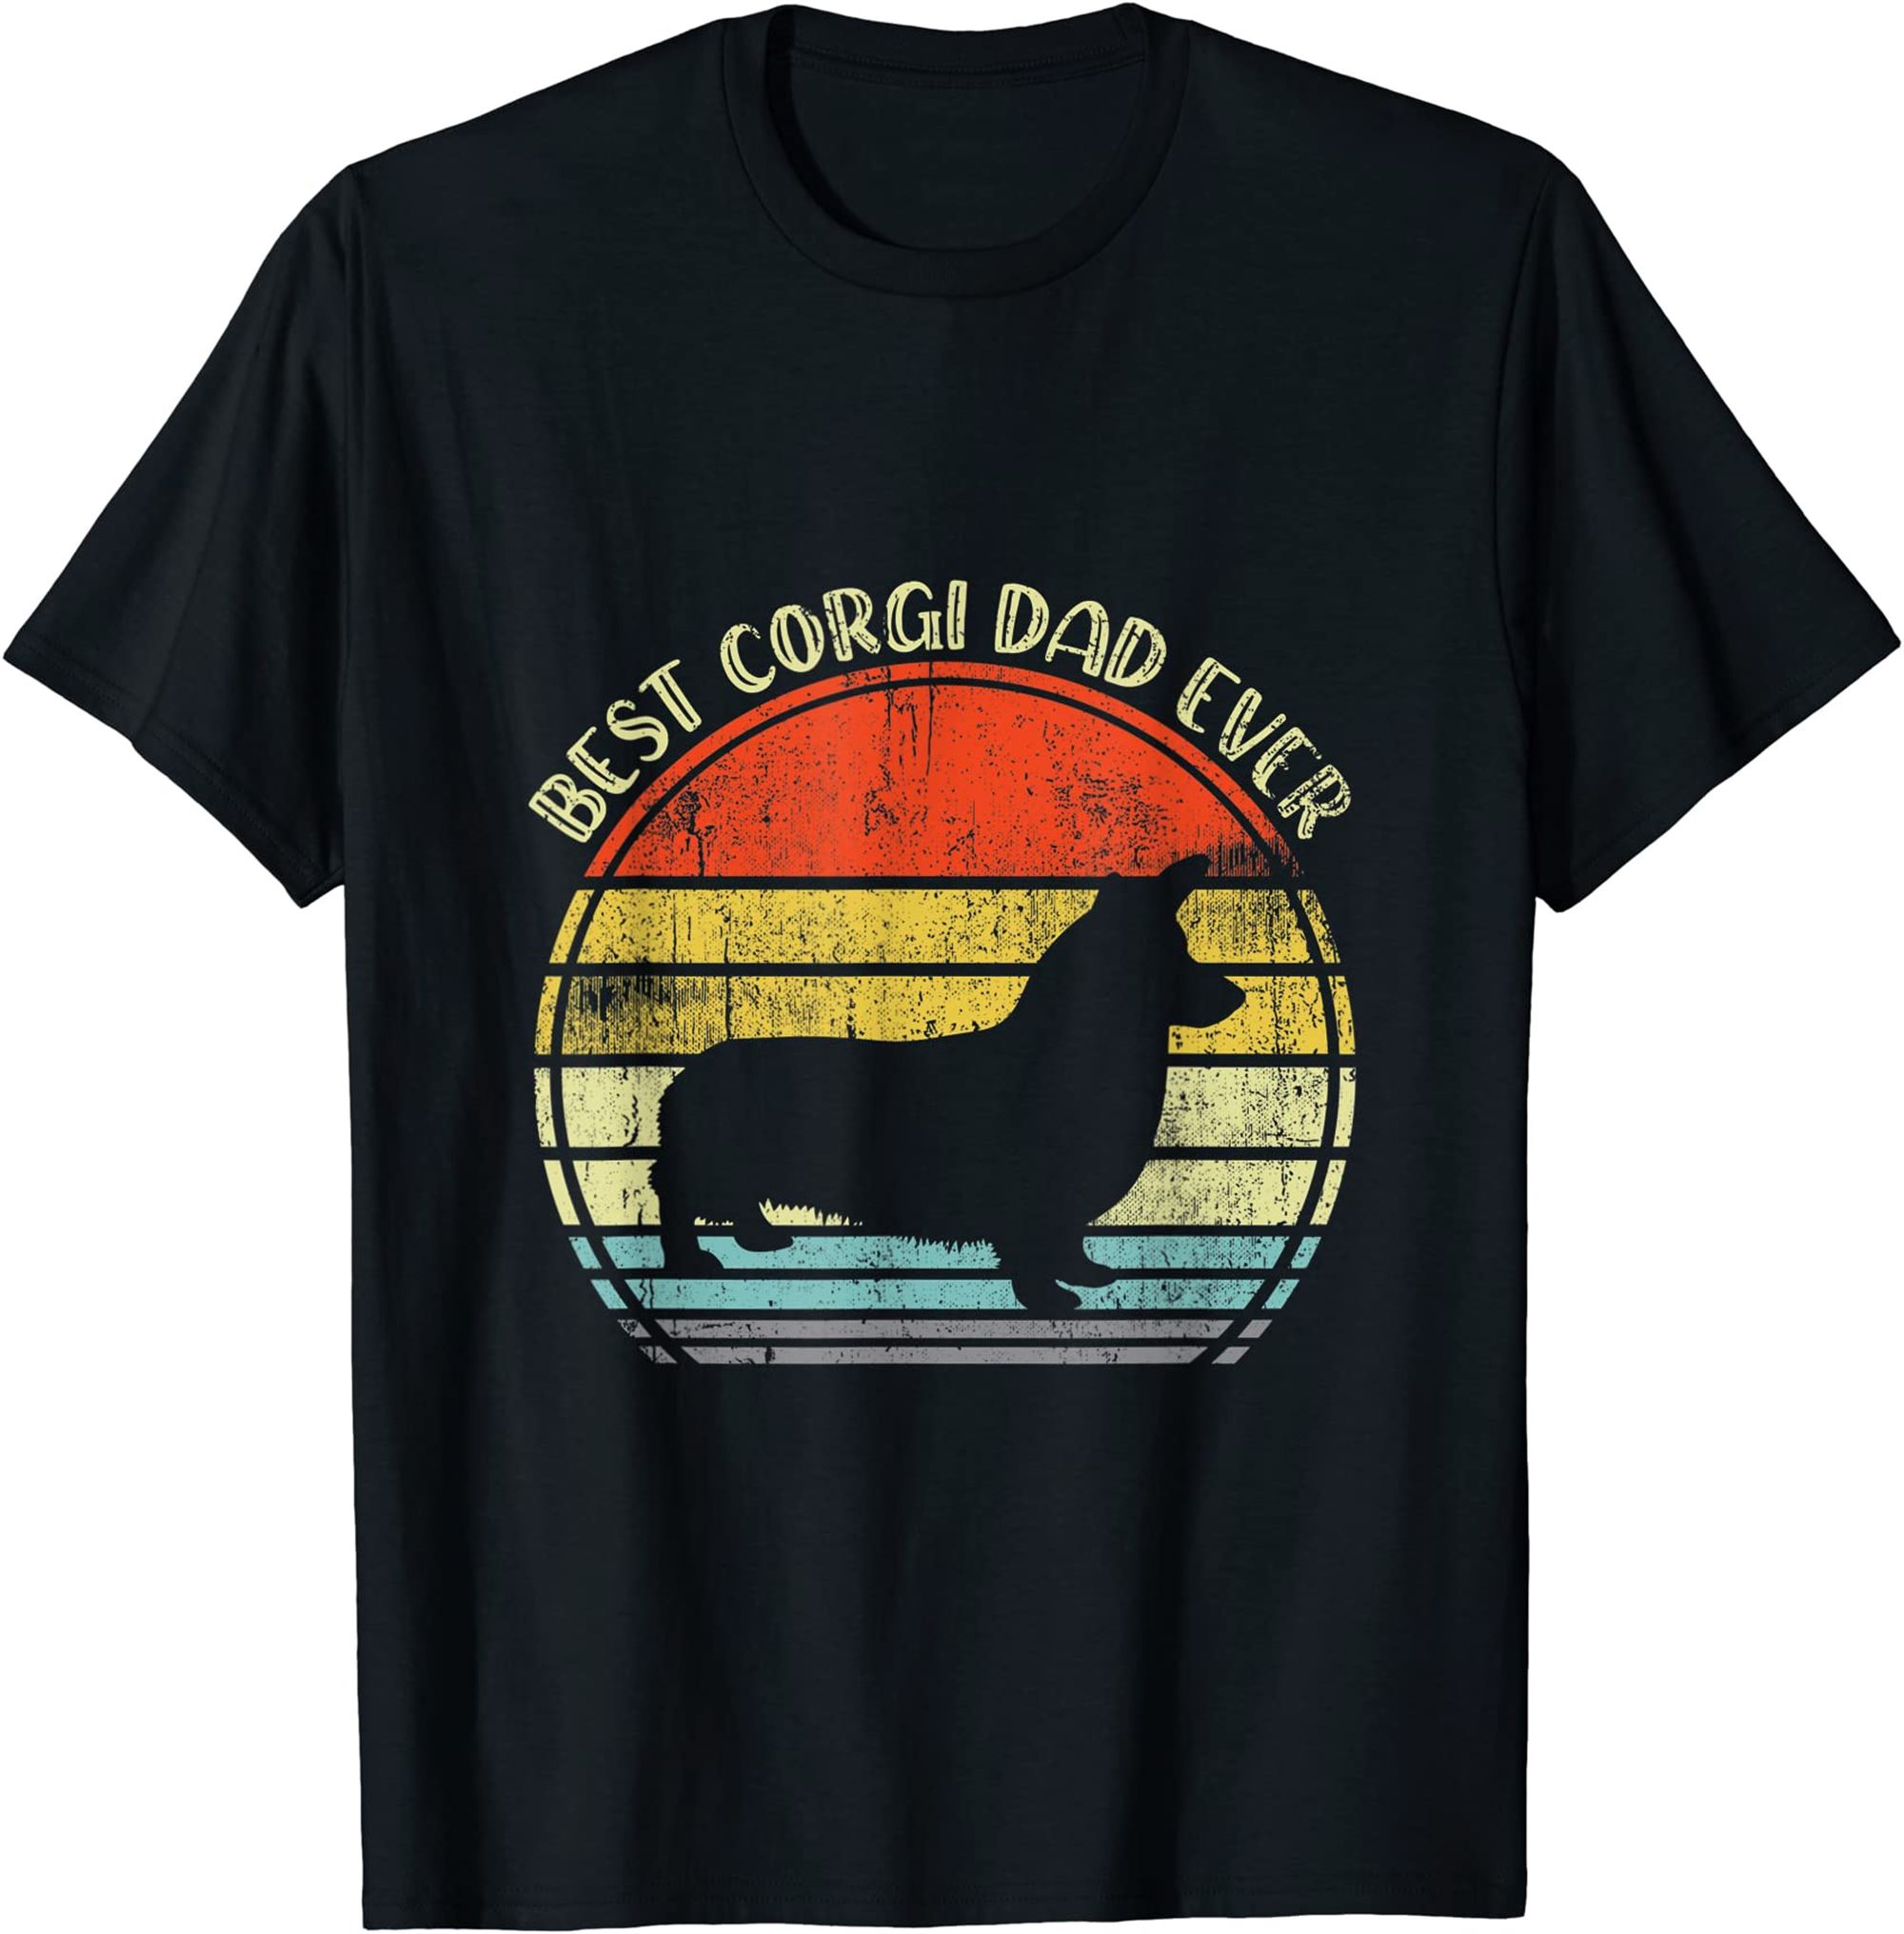 Best Corgi Dad Ever Design T-shirt Plus Size Up To 5xl